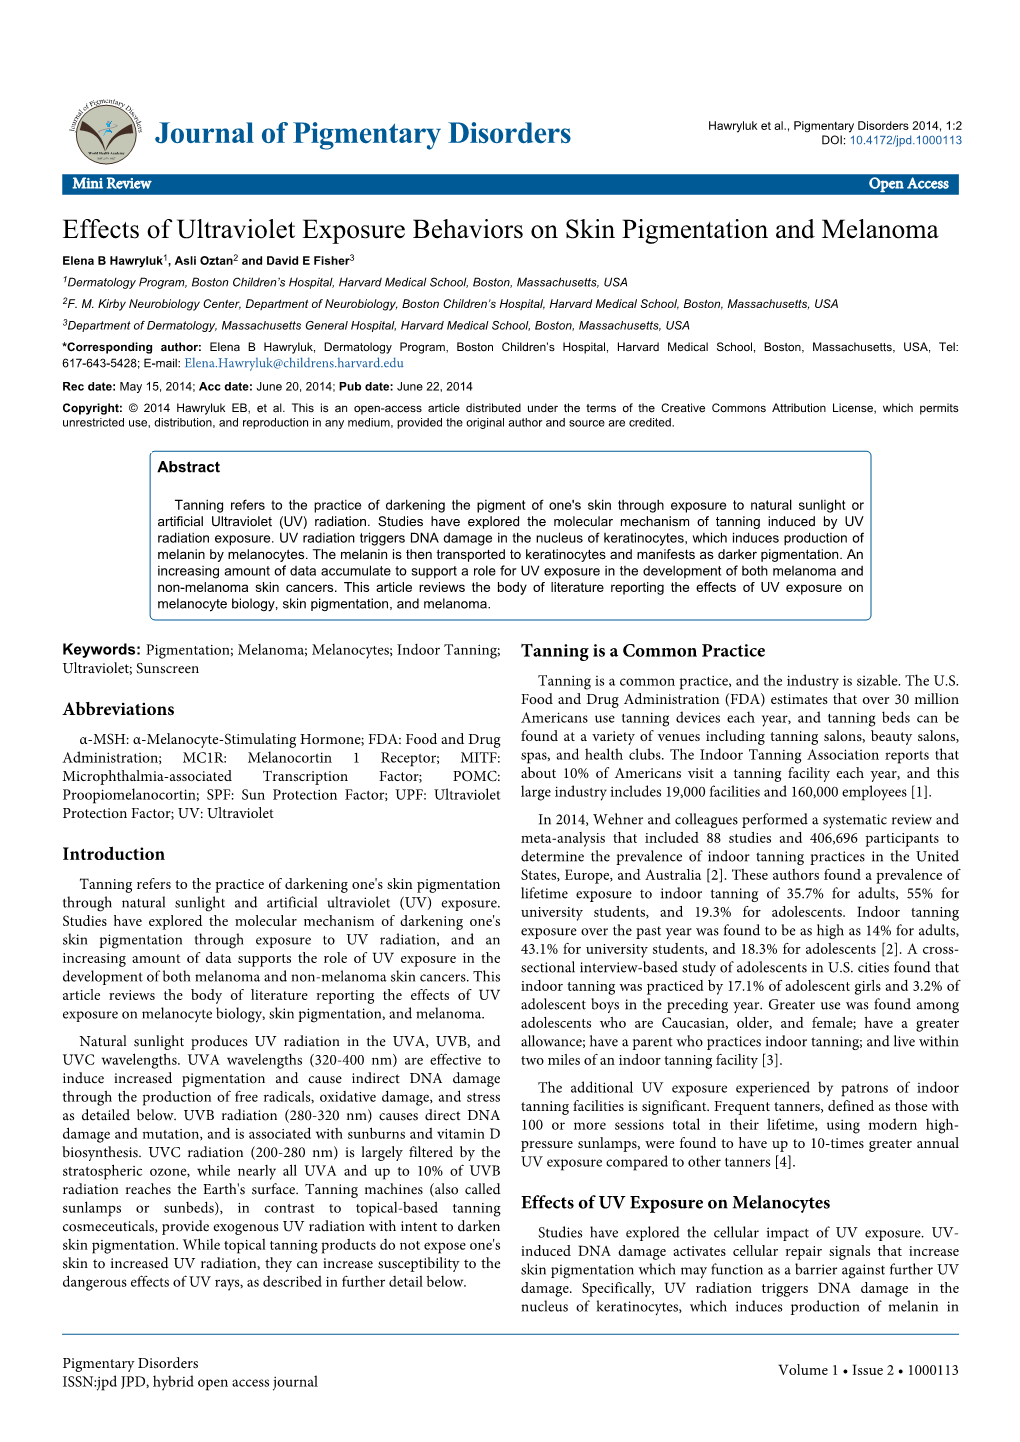 Effects of Ultraviolet Exposure Behaviors on Skin Pigmentation and Melanoma